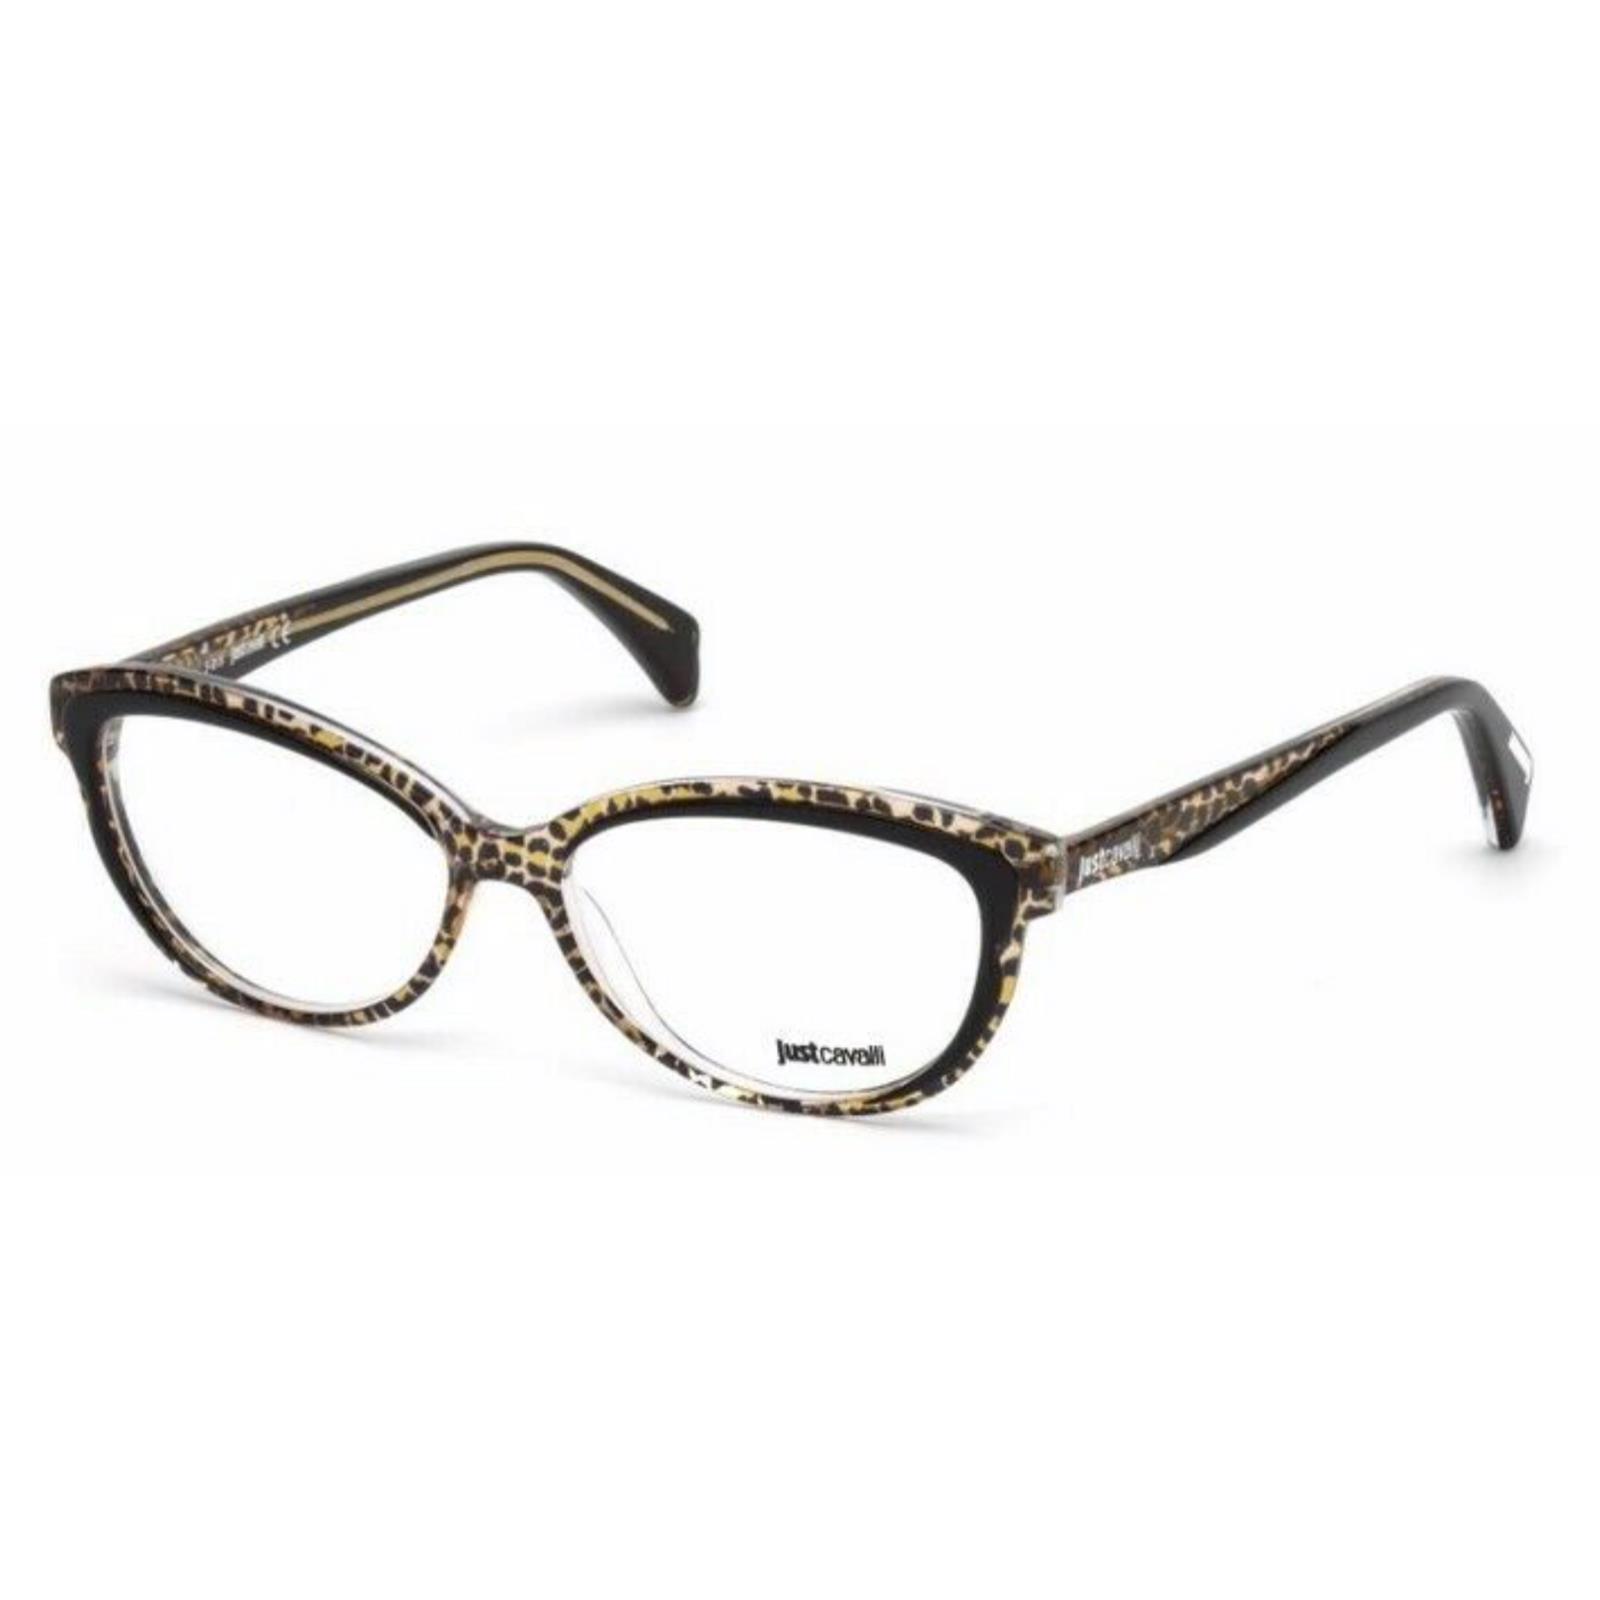 Just Cavalli Eyeglasses JC0748 047 54-14 140 Black Leopard Cat-eye Frames